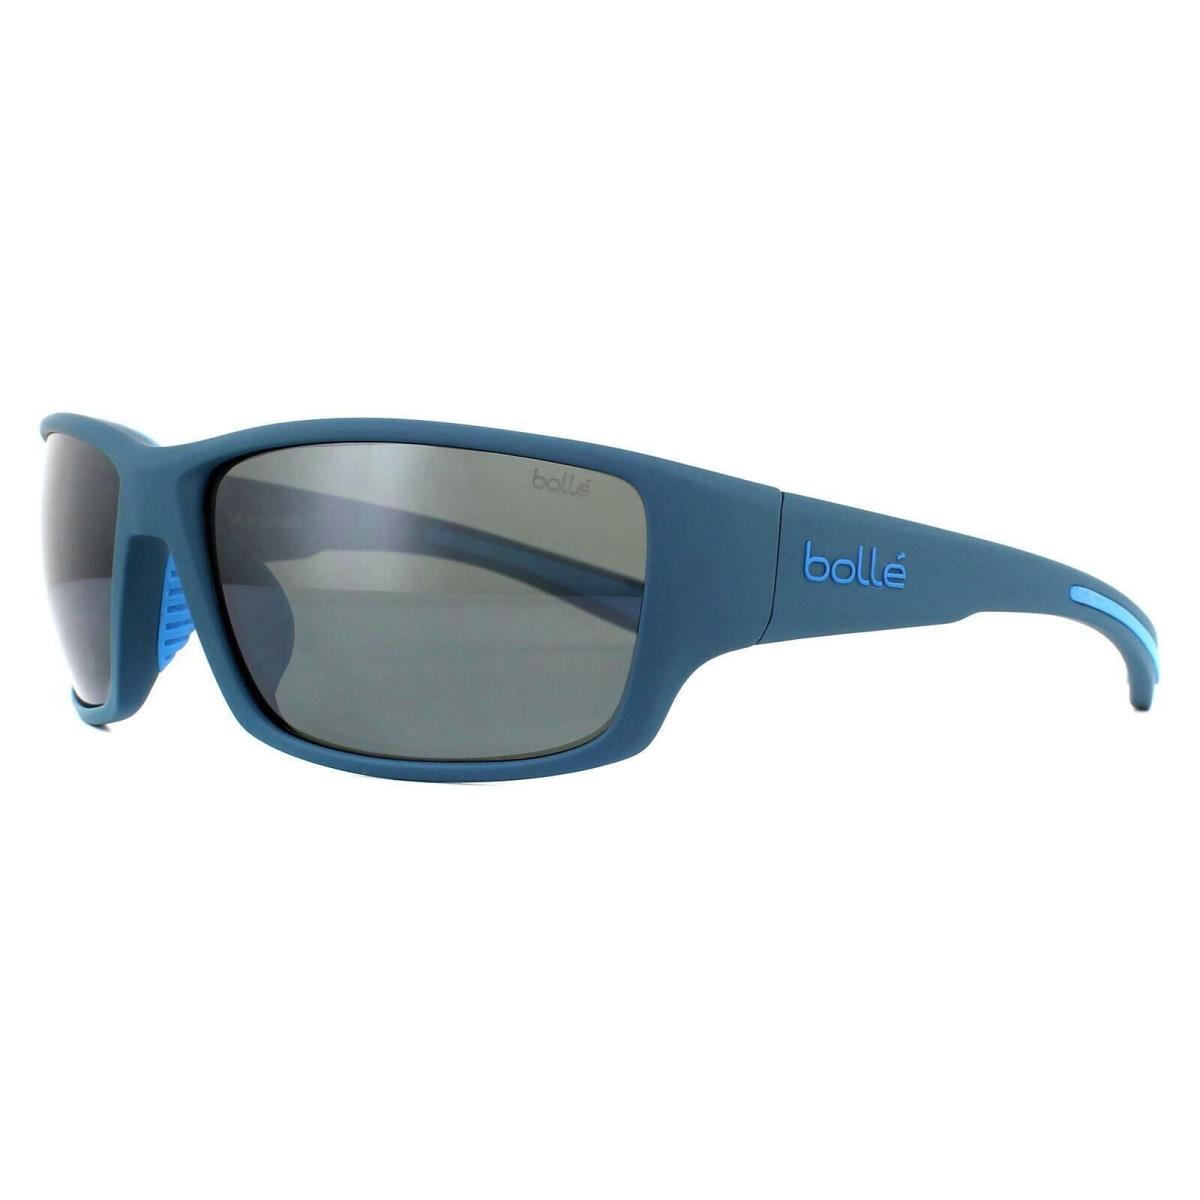 Bolle Sunglasses - Kayman 12369 - Matte Storm Blue/gray Lens 62 mm